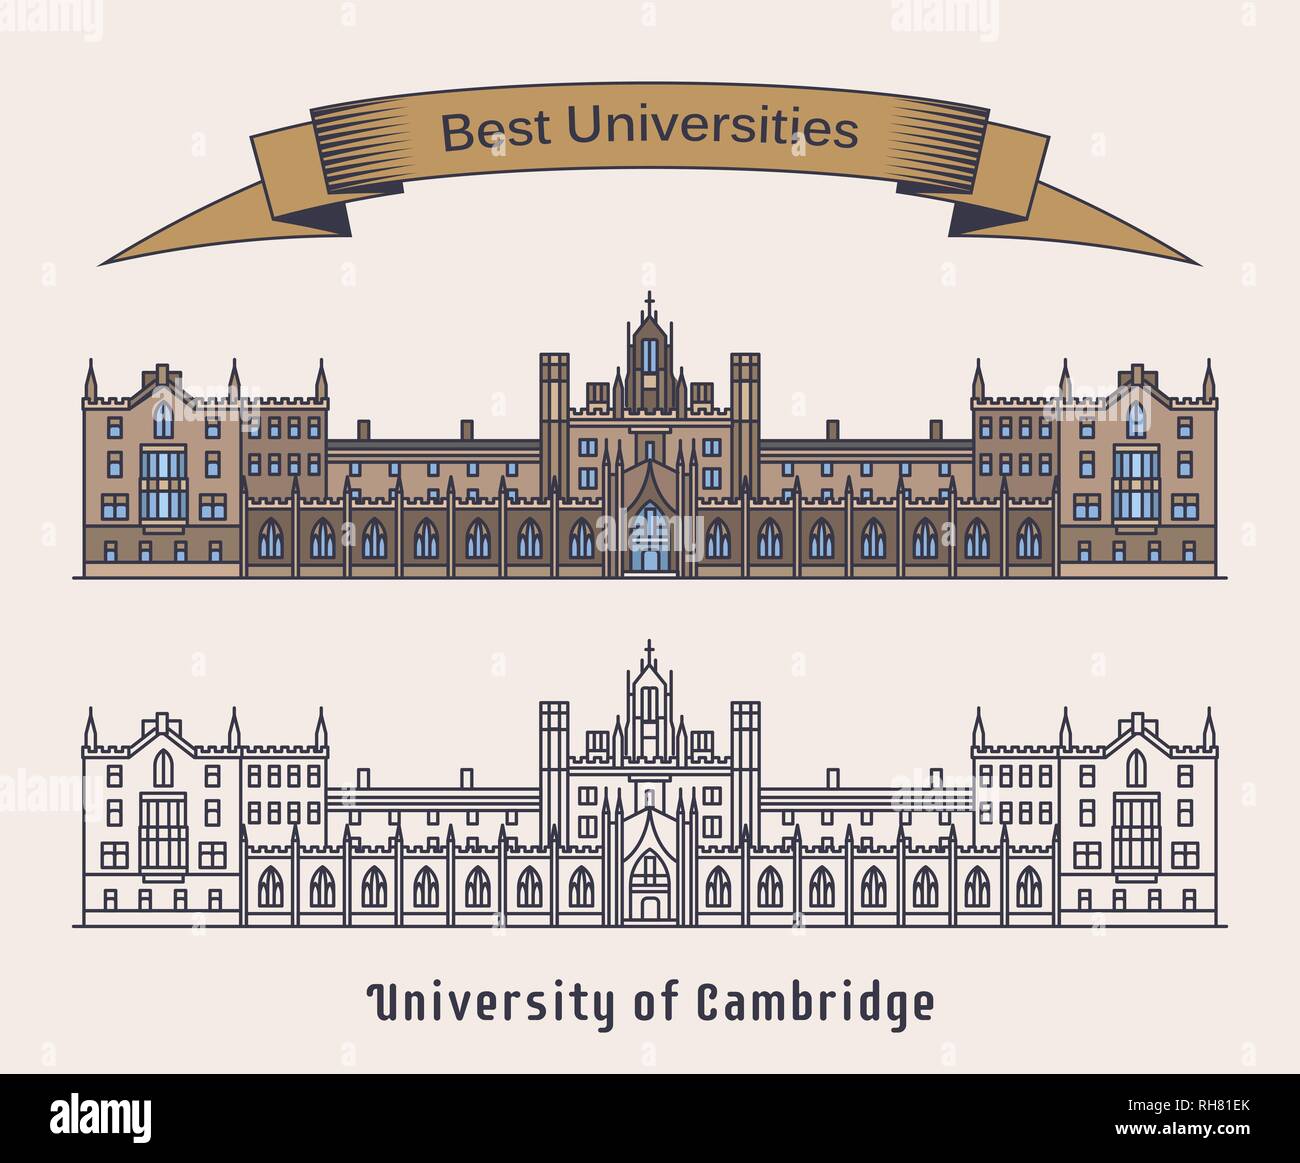 University of Cambridge building. Architecture Stock Vector